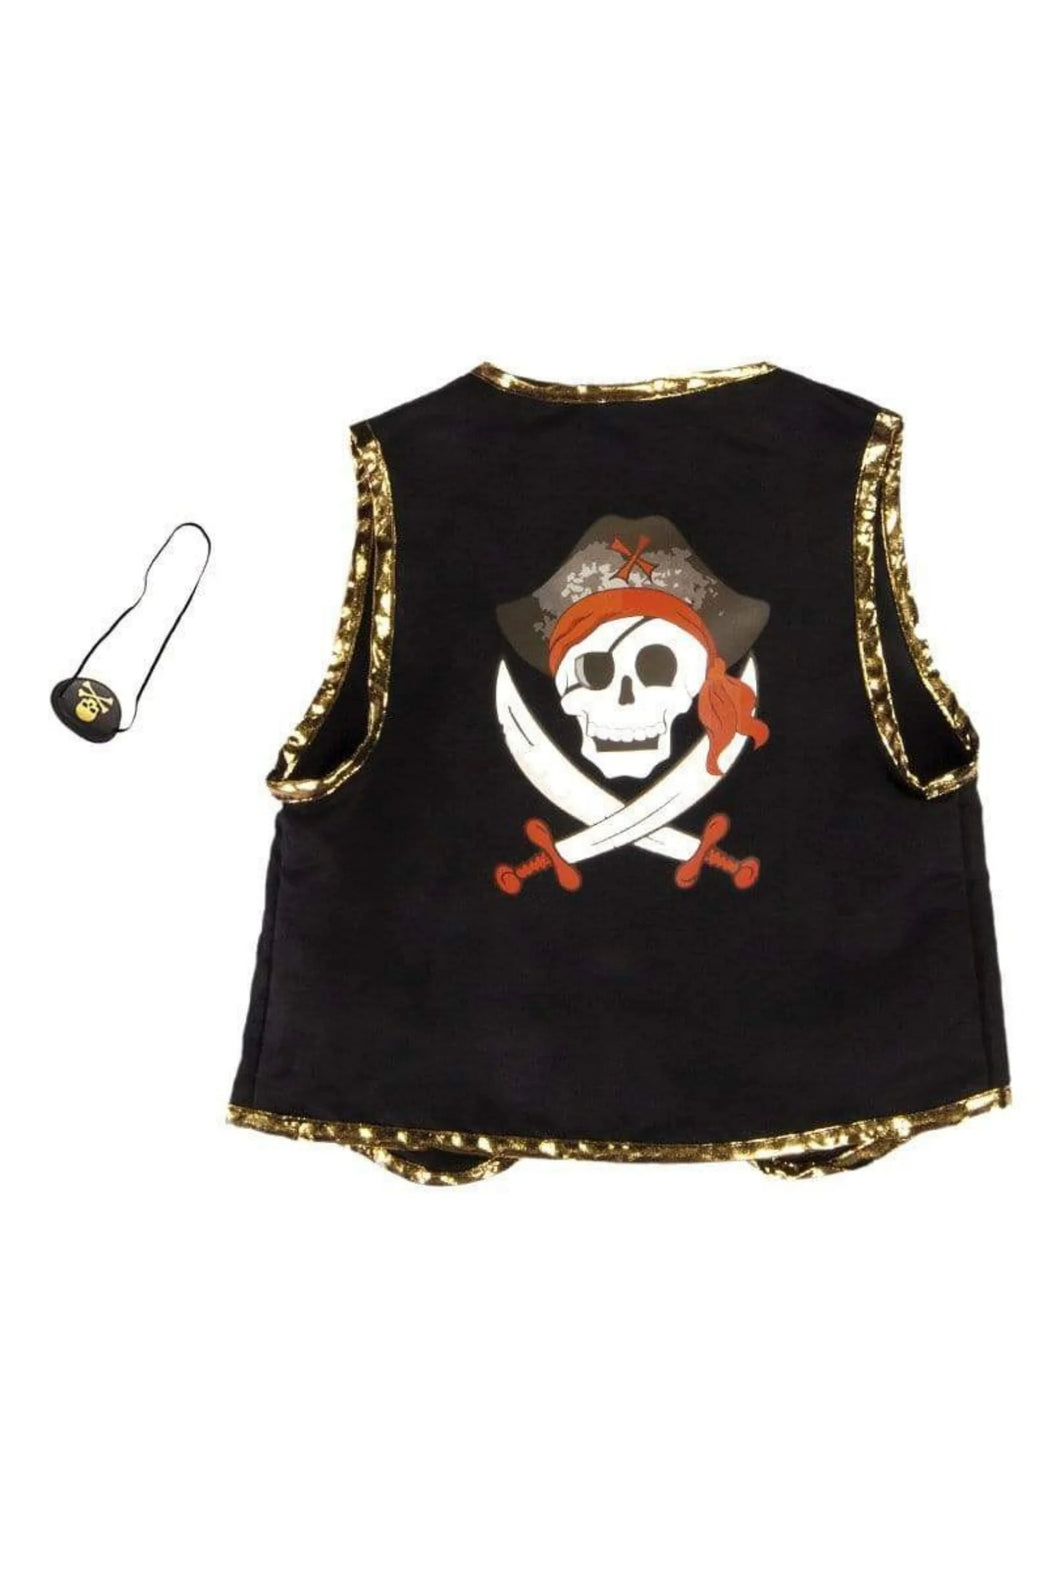 Great Pretenders Pirate Vest & Eye Patch